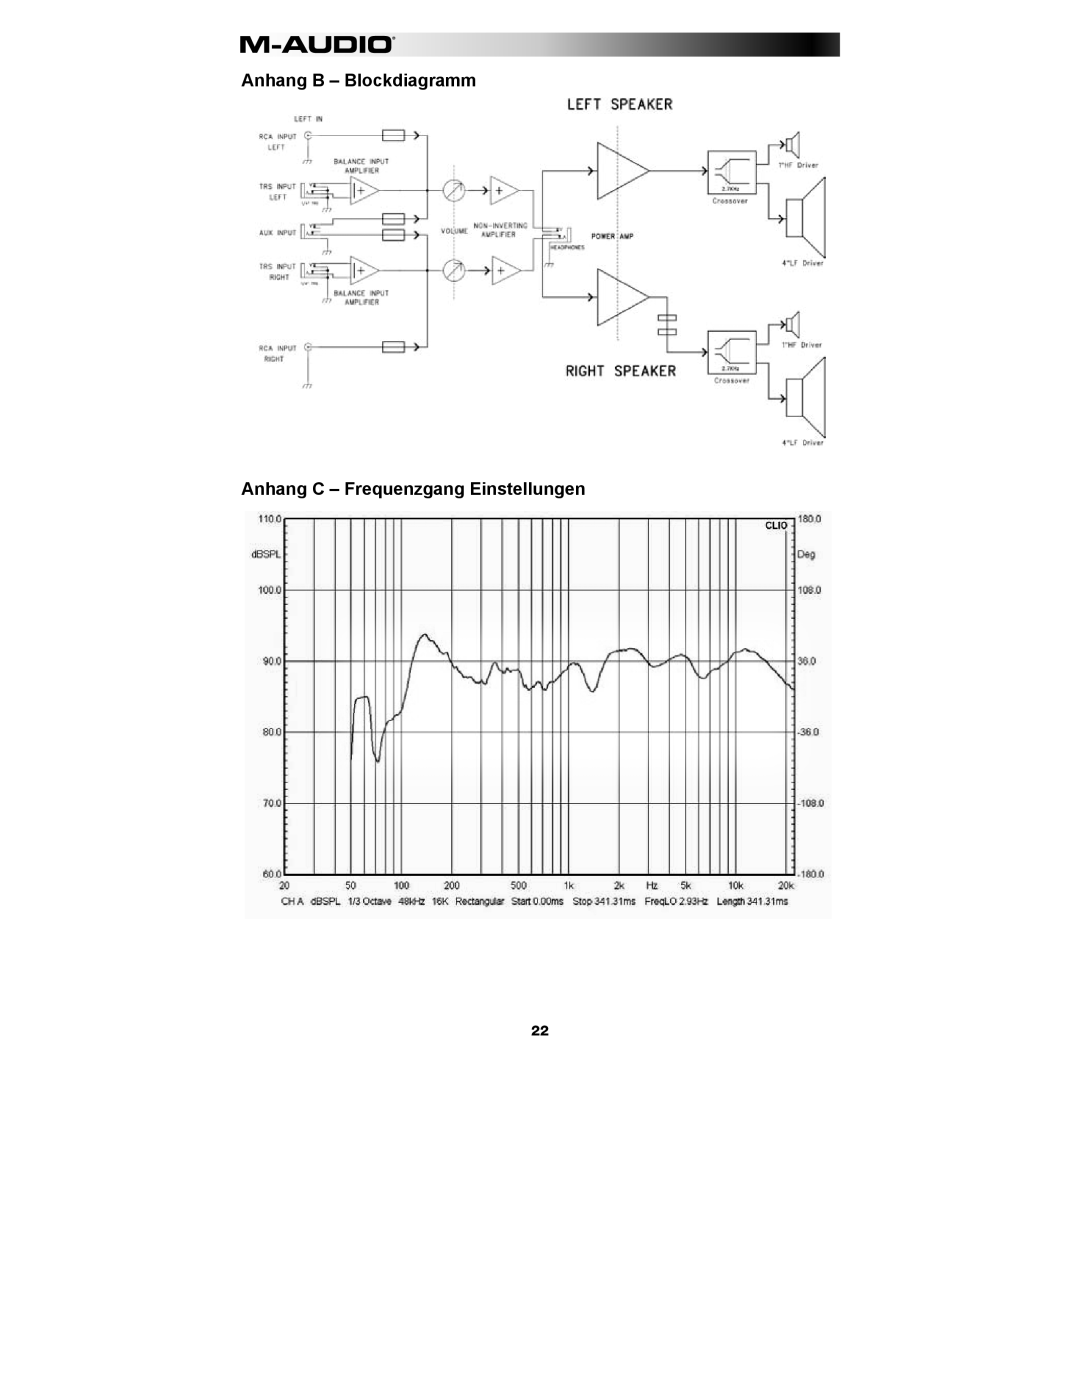 M-Audio AV 40 manual Anhang B - Blockdiagramm, Anhang C - Frequenzgang Einstellungen 